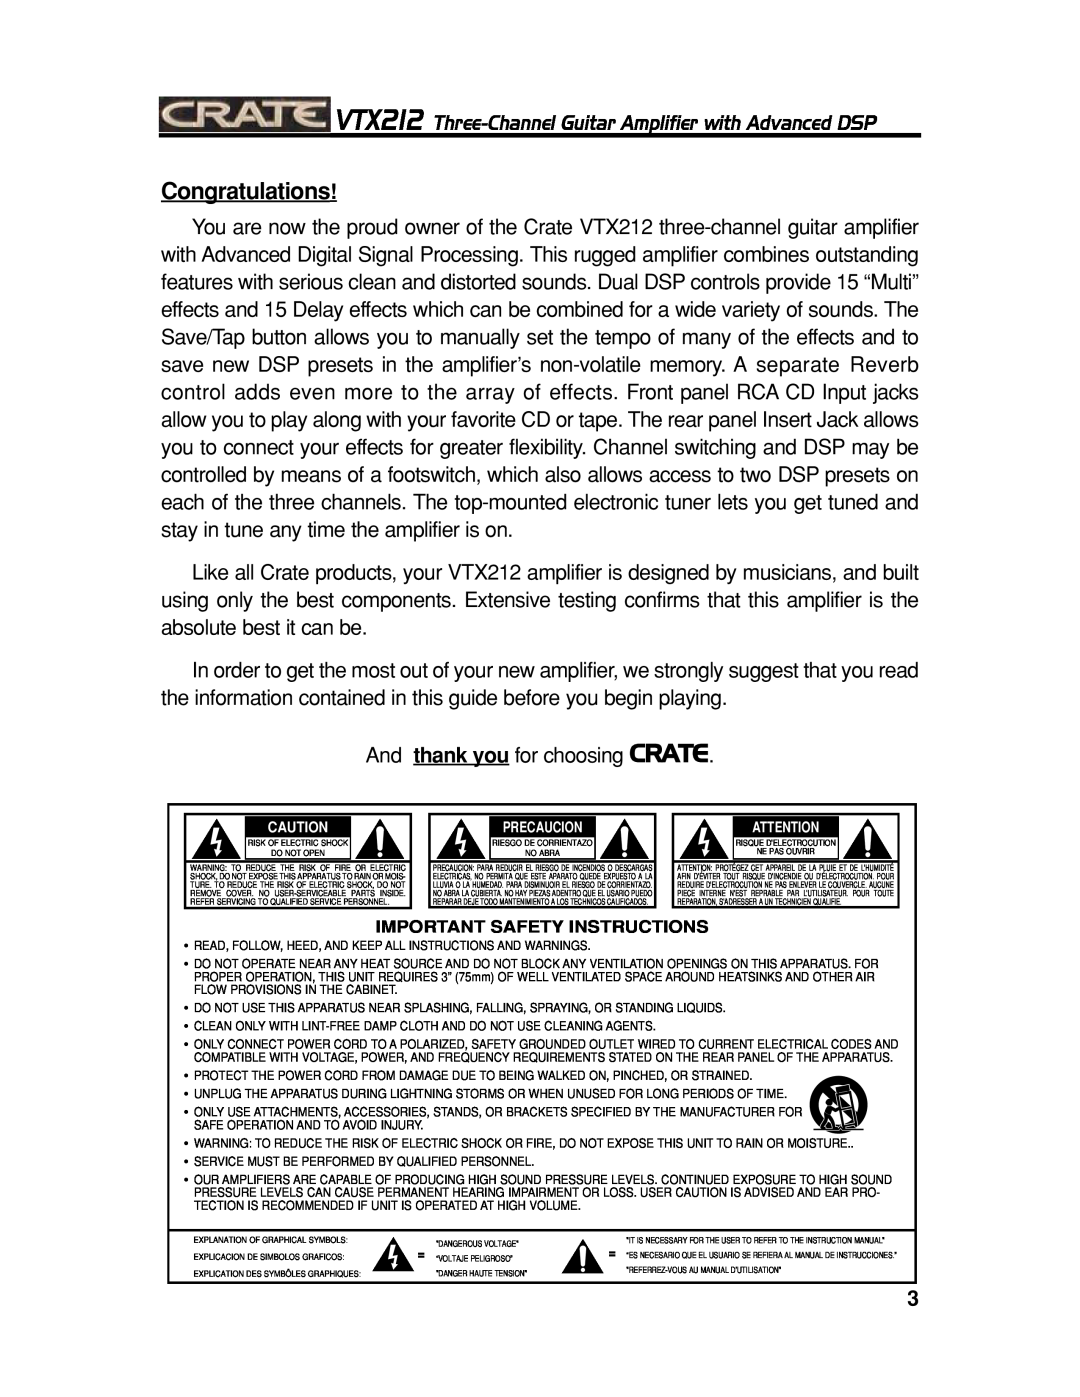 Crate Amplifiers VTX212 manual Congratulations 